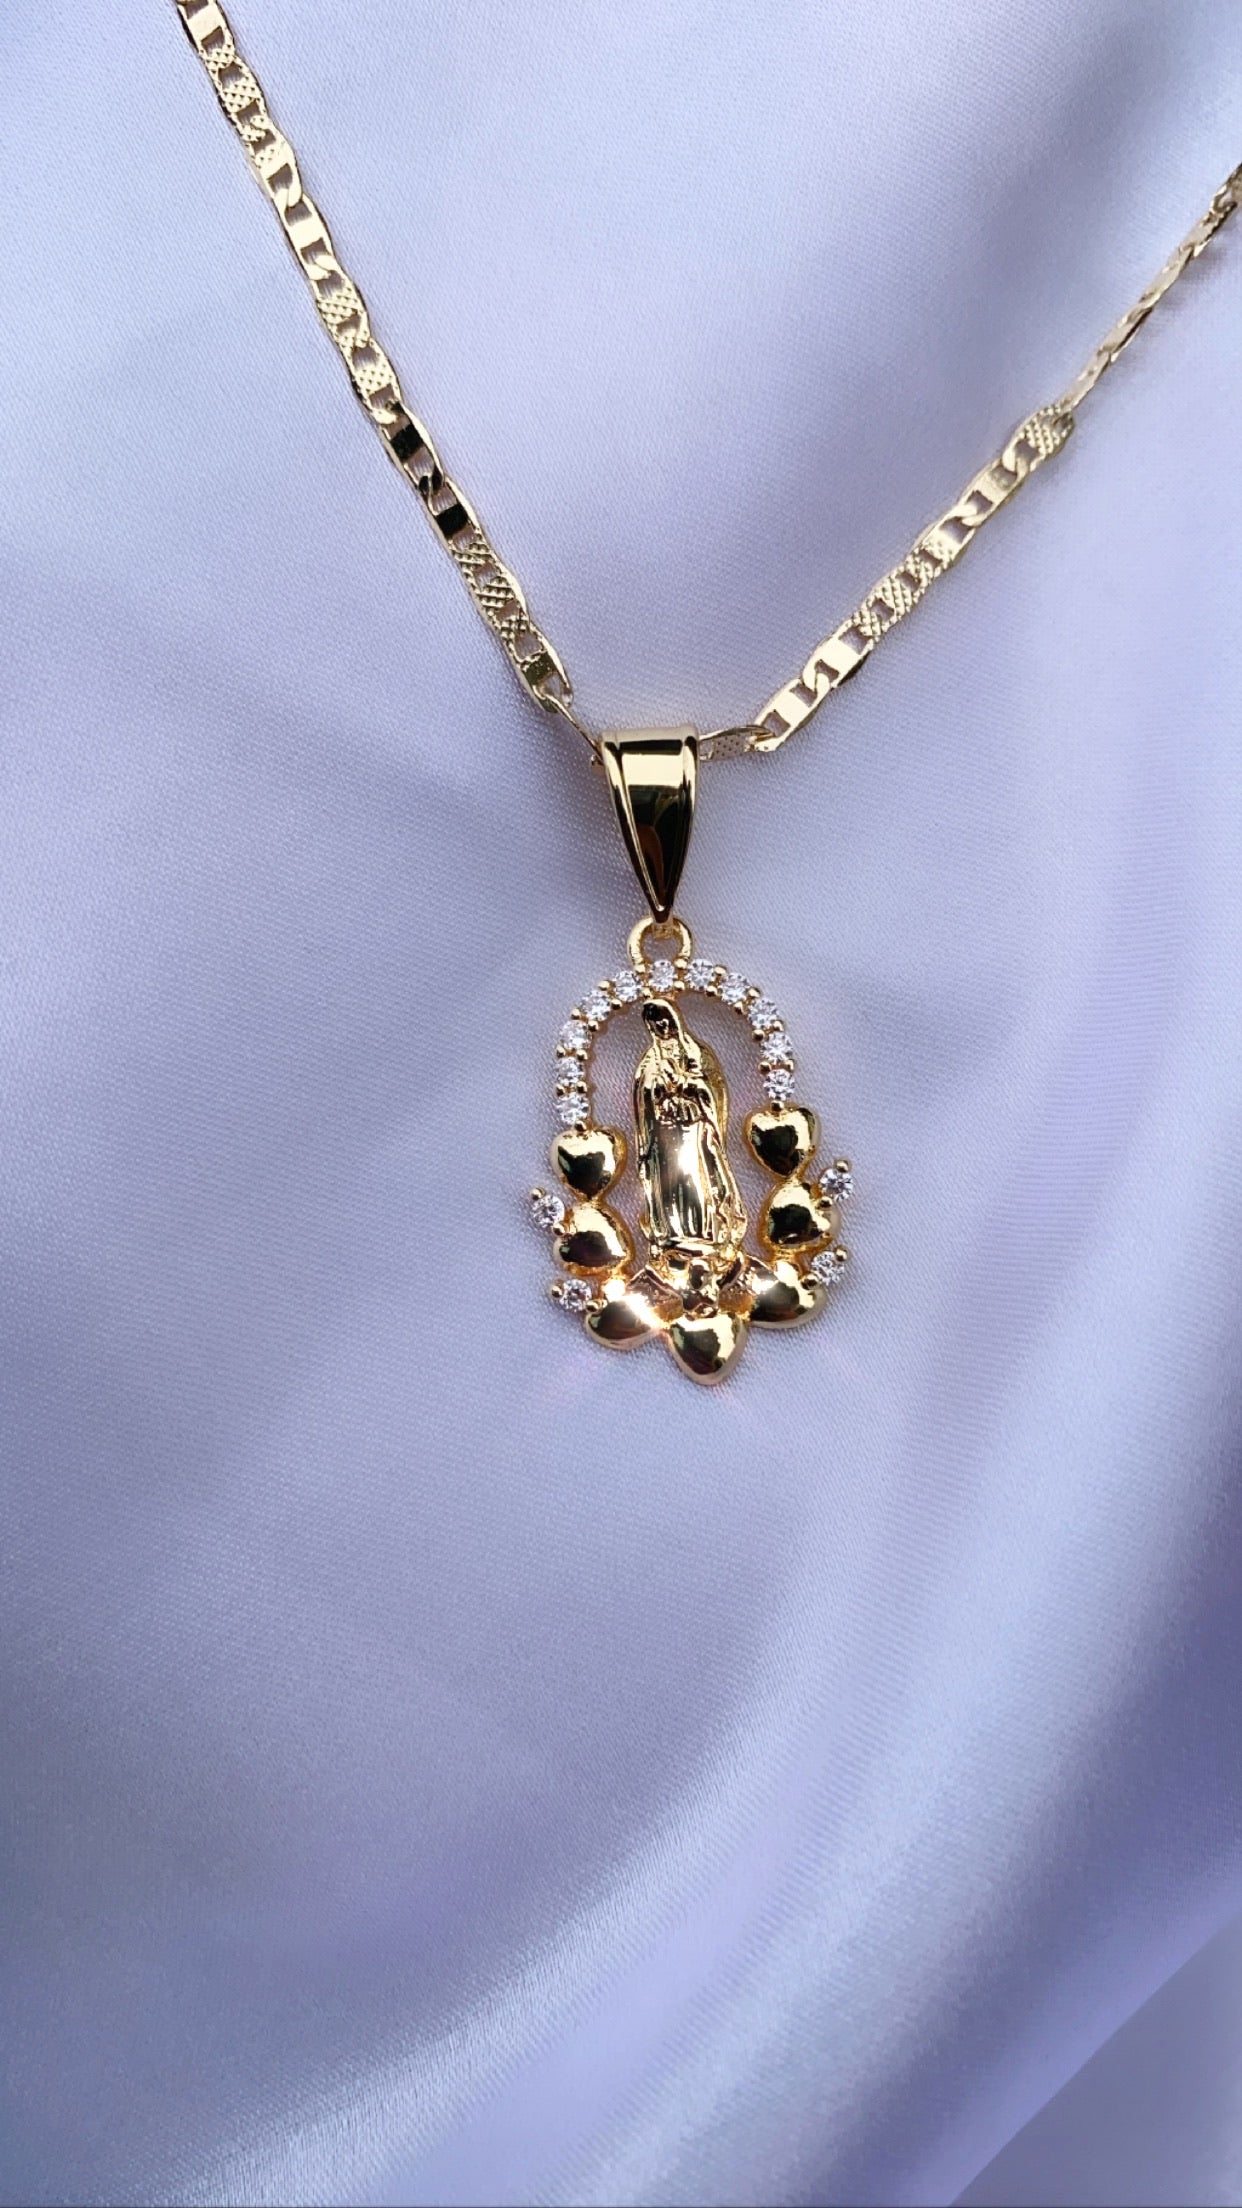 Dainty morenita necklace